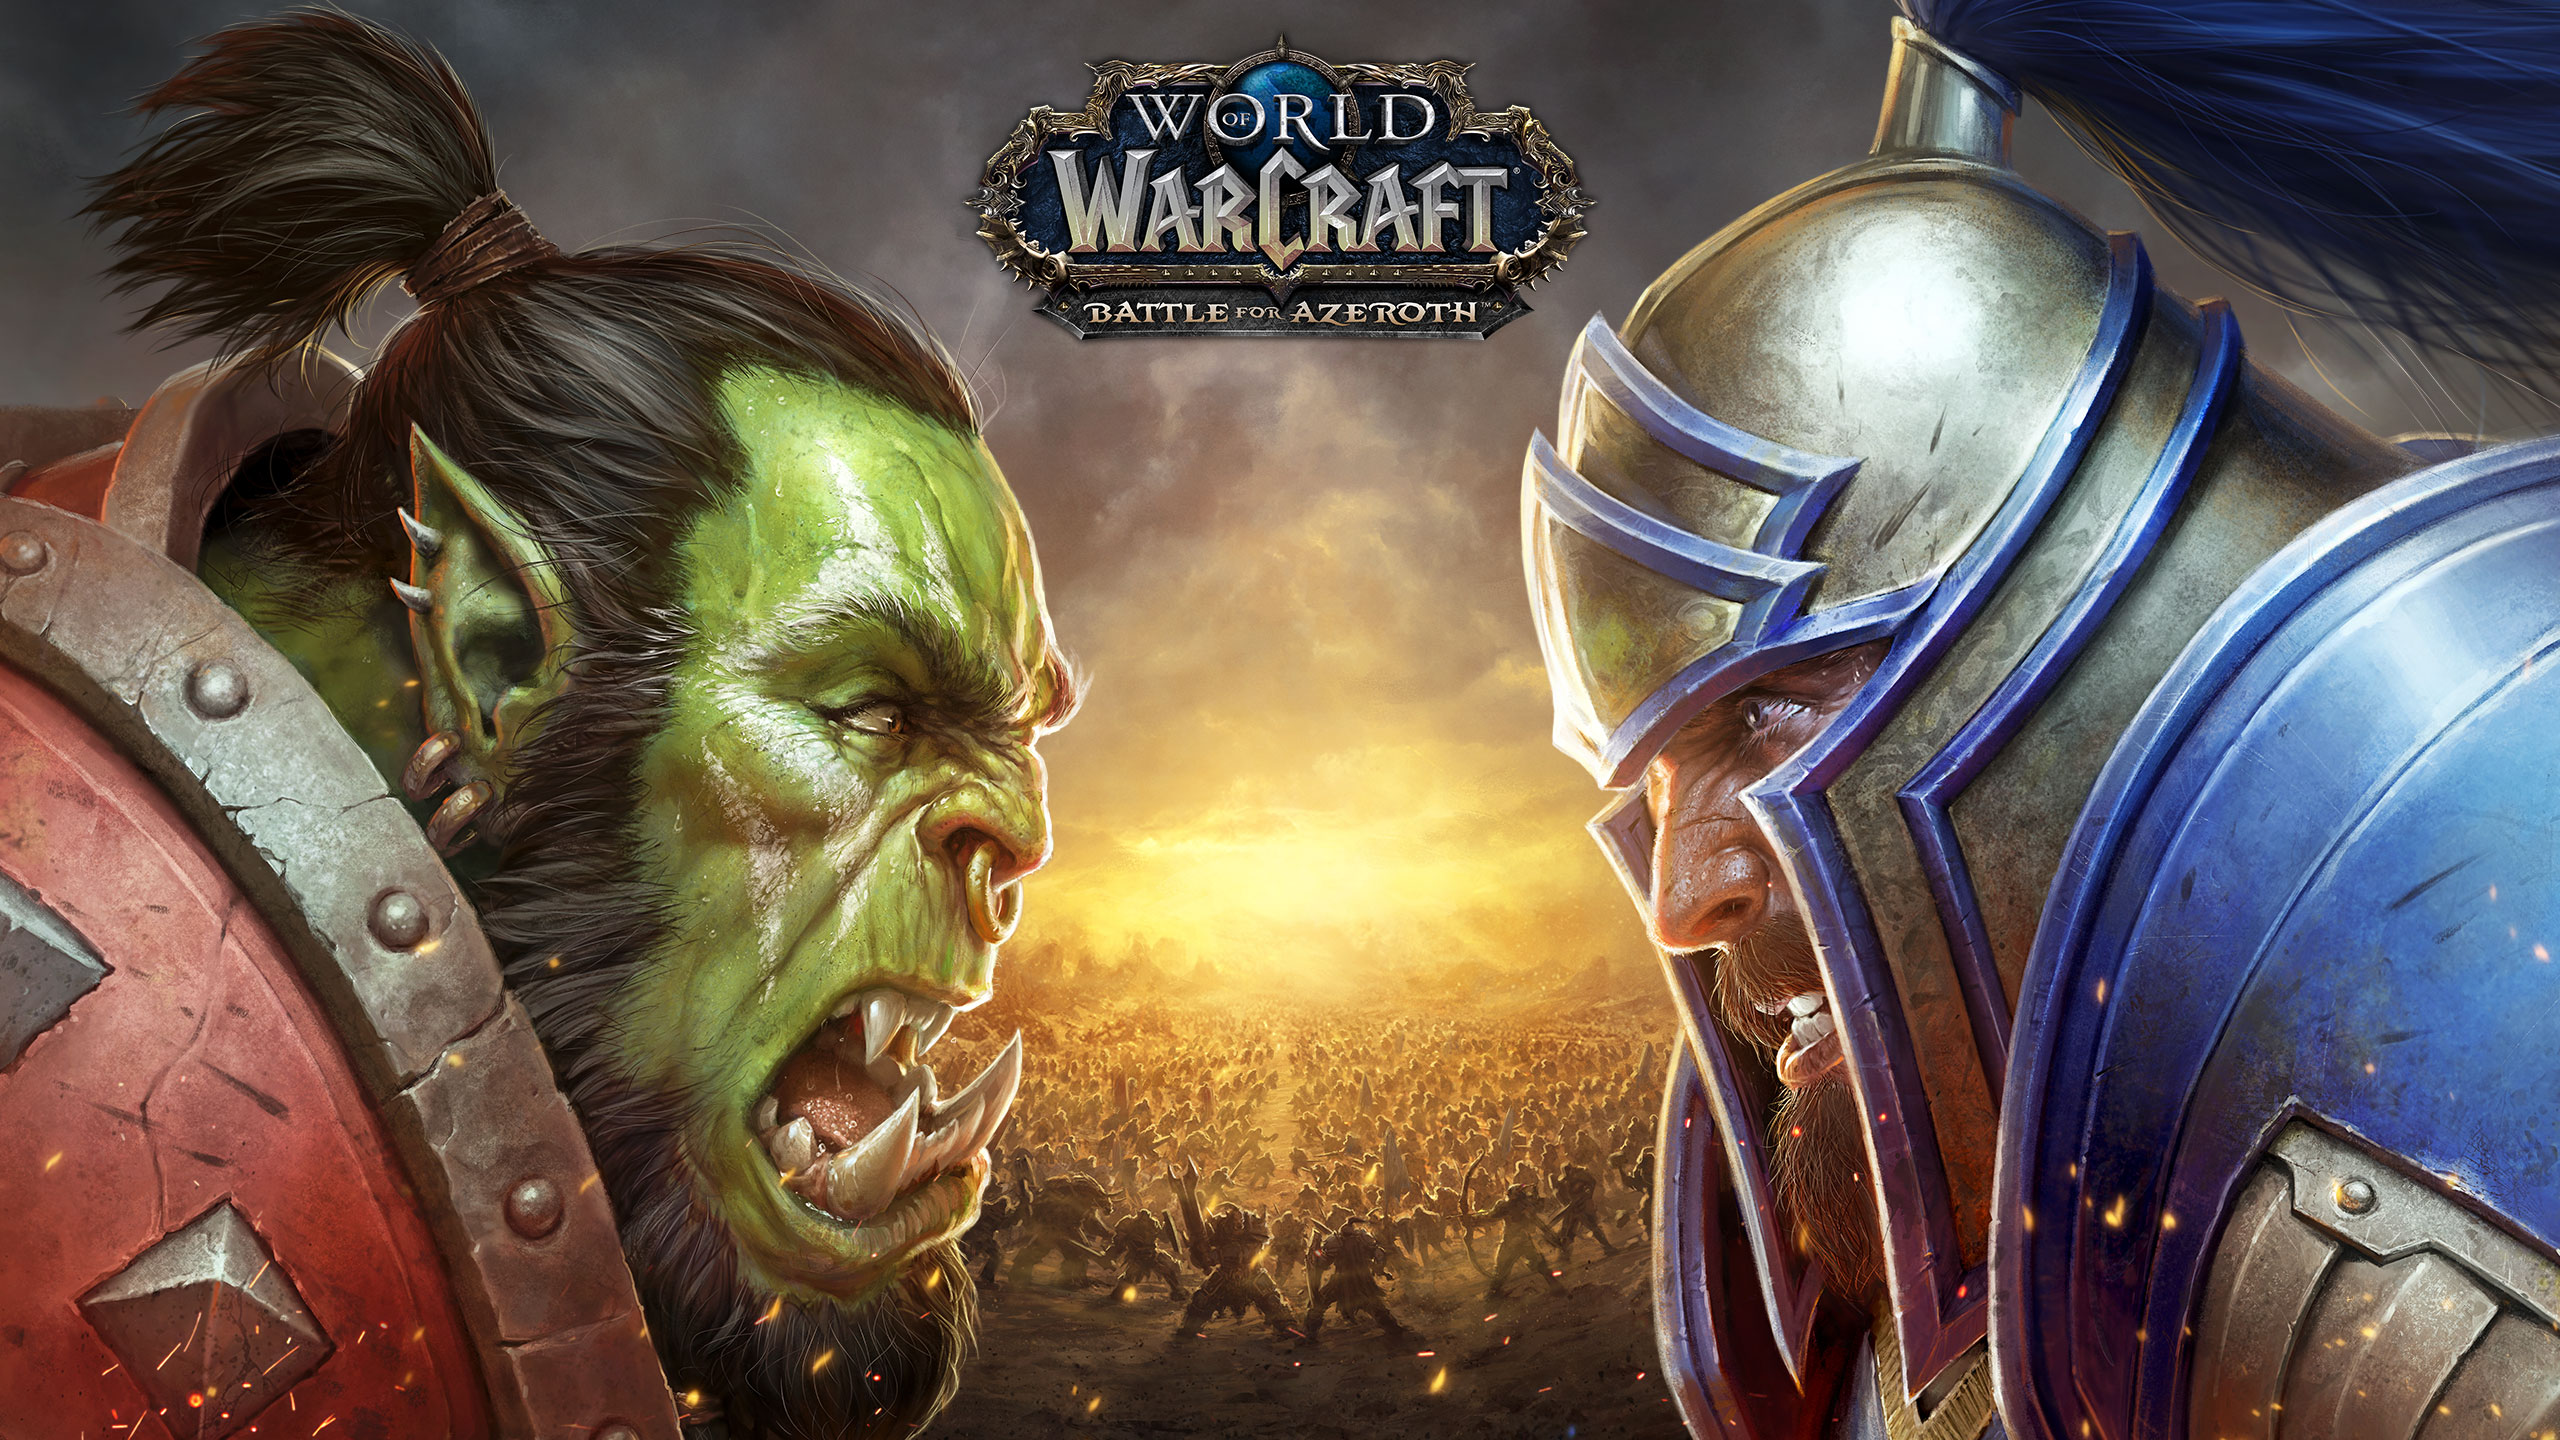 World of Warcraft: Battle for Azeroth, Video games, Artwork, Orc, Horde, Alliance, Warcraft, World of Warcraft, Blizzard Entertainment Wallpaper